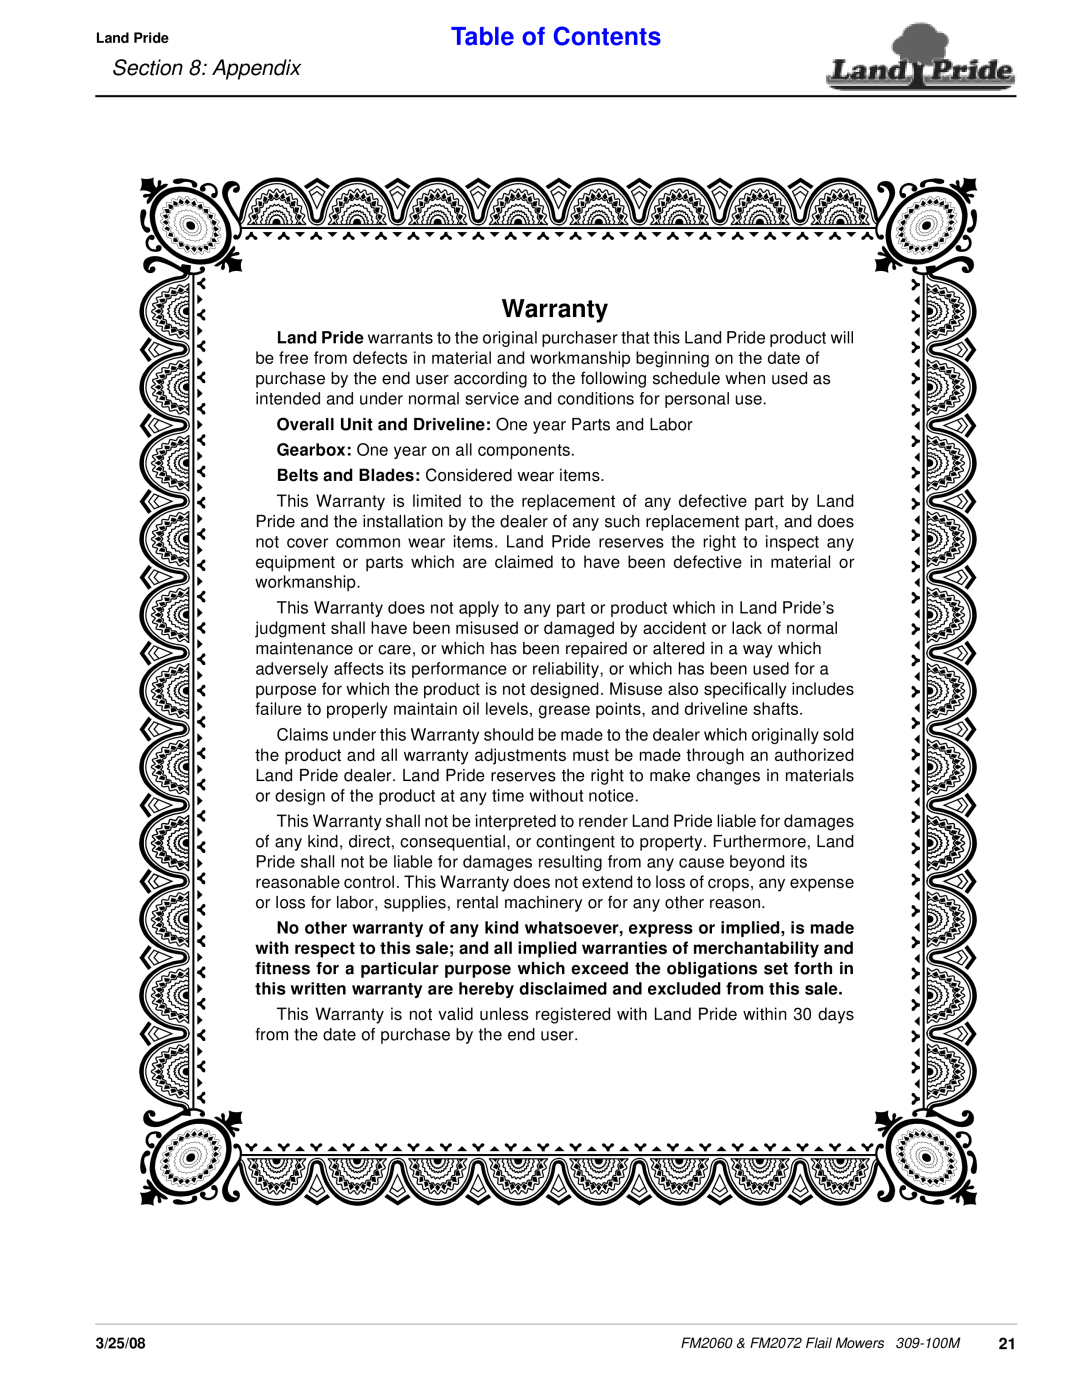 Land Pride 309-100M manual Warranty, Table of Contents, Appendix 